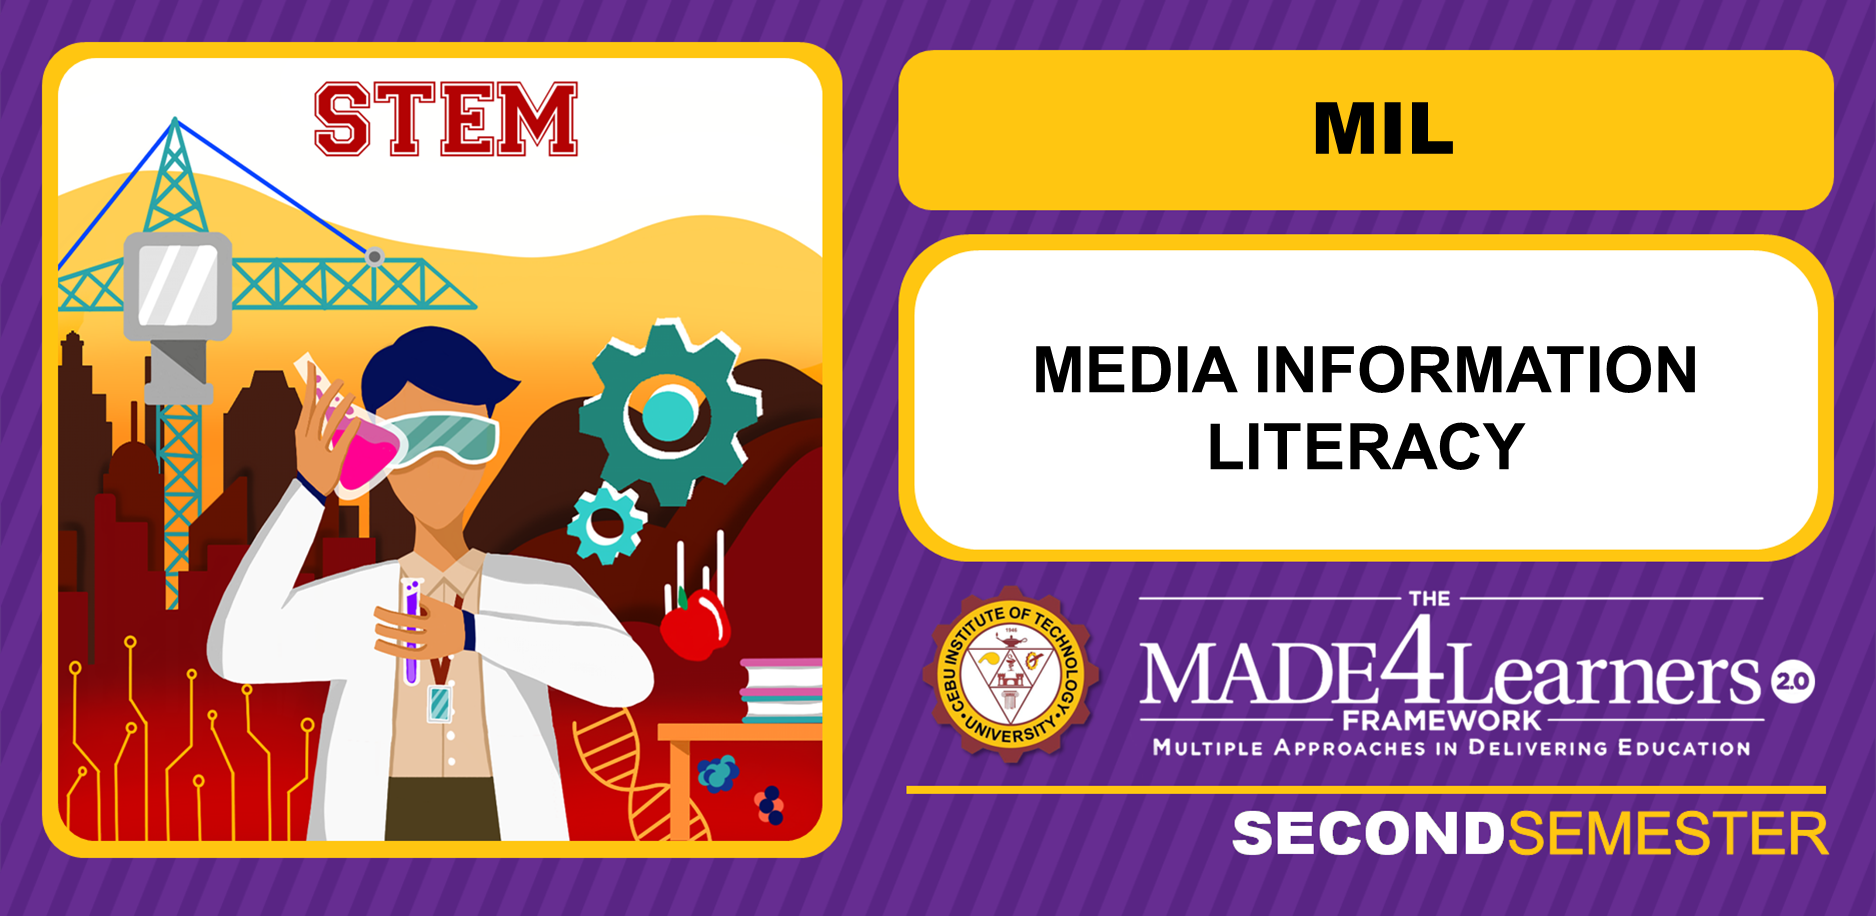 MIL : Media Information Literacy (Martinez)